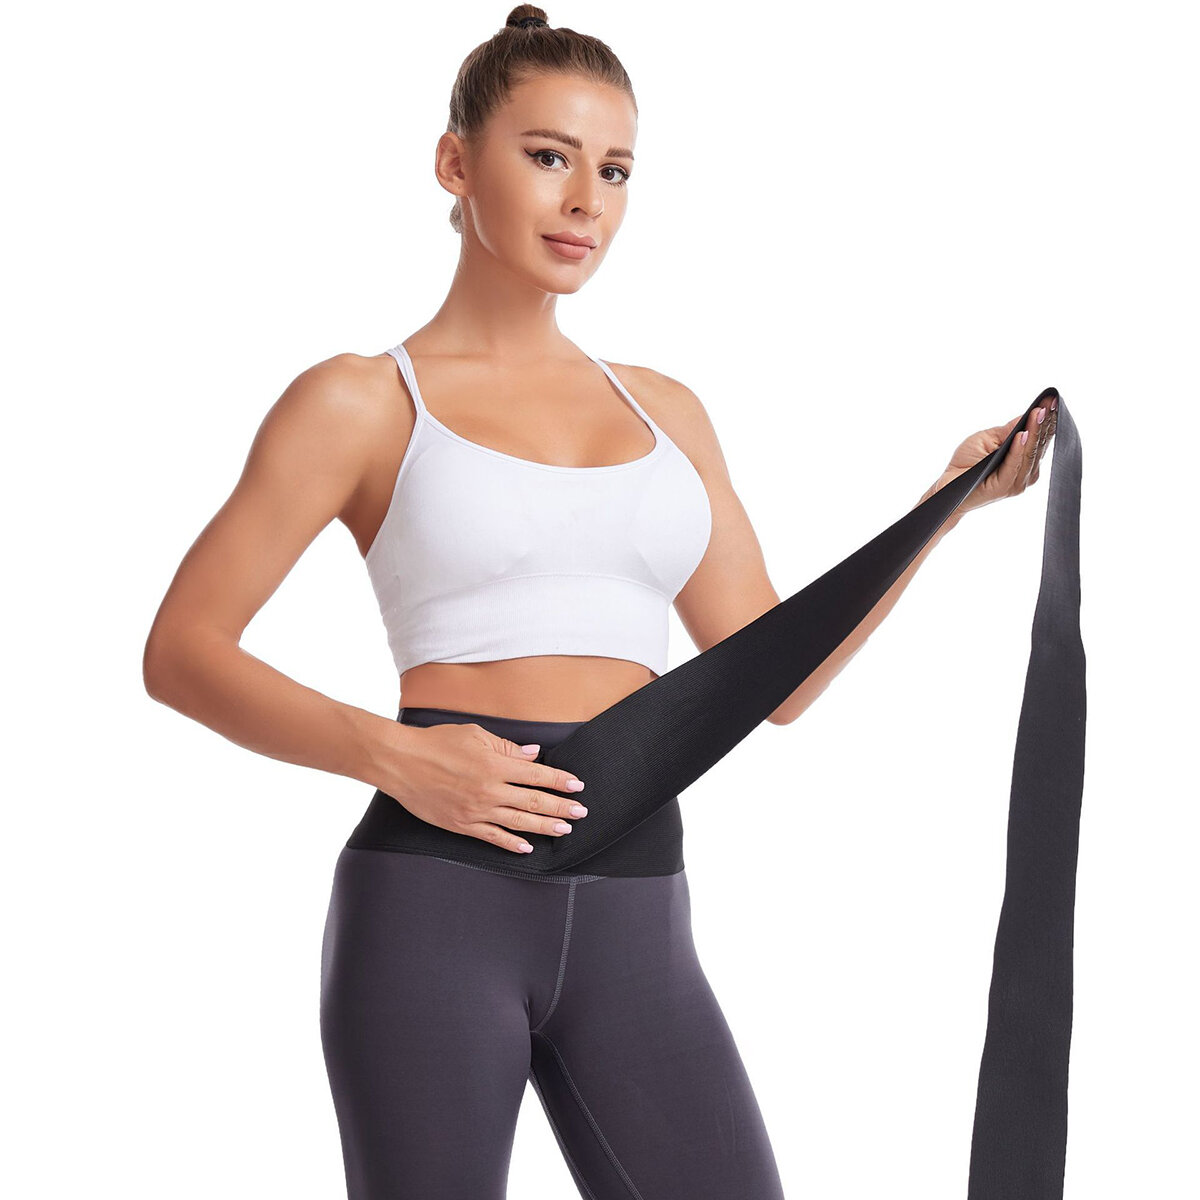 

Women Waist Bandage Wrap Trimmer Belt Waist Trainer Shaperwear Tummy Control Slimming Fat Burning For Postpartum Sheath